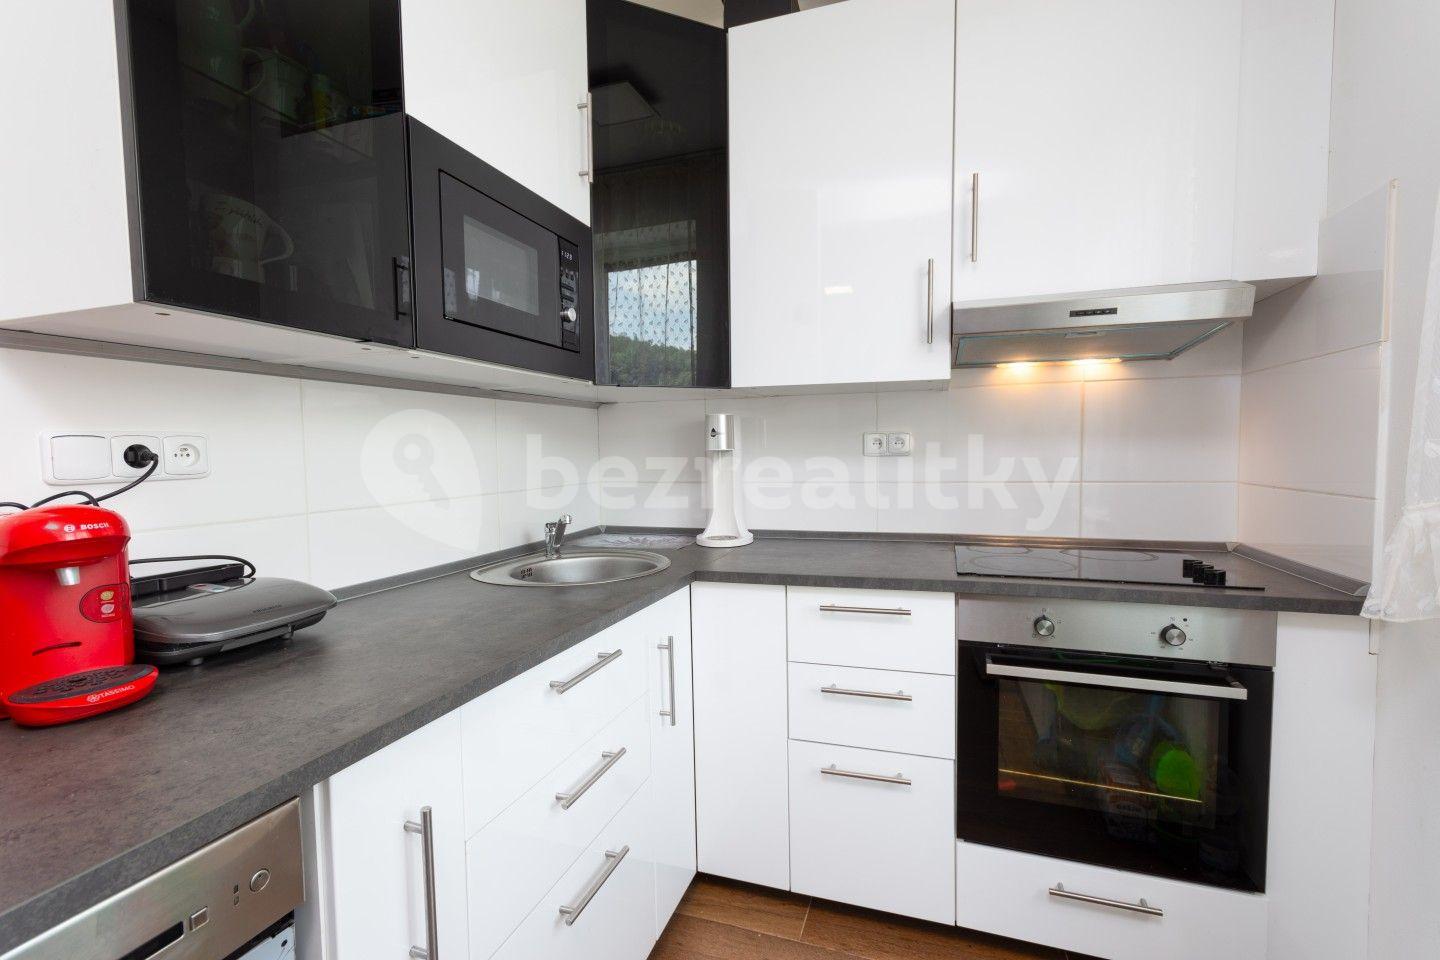 2 bedroom with open-plan kitchen flat for sale, 60 m², Lichnov, Moravskoslezský Region